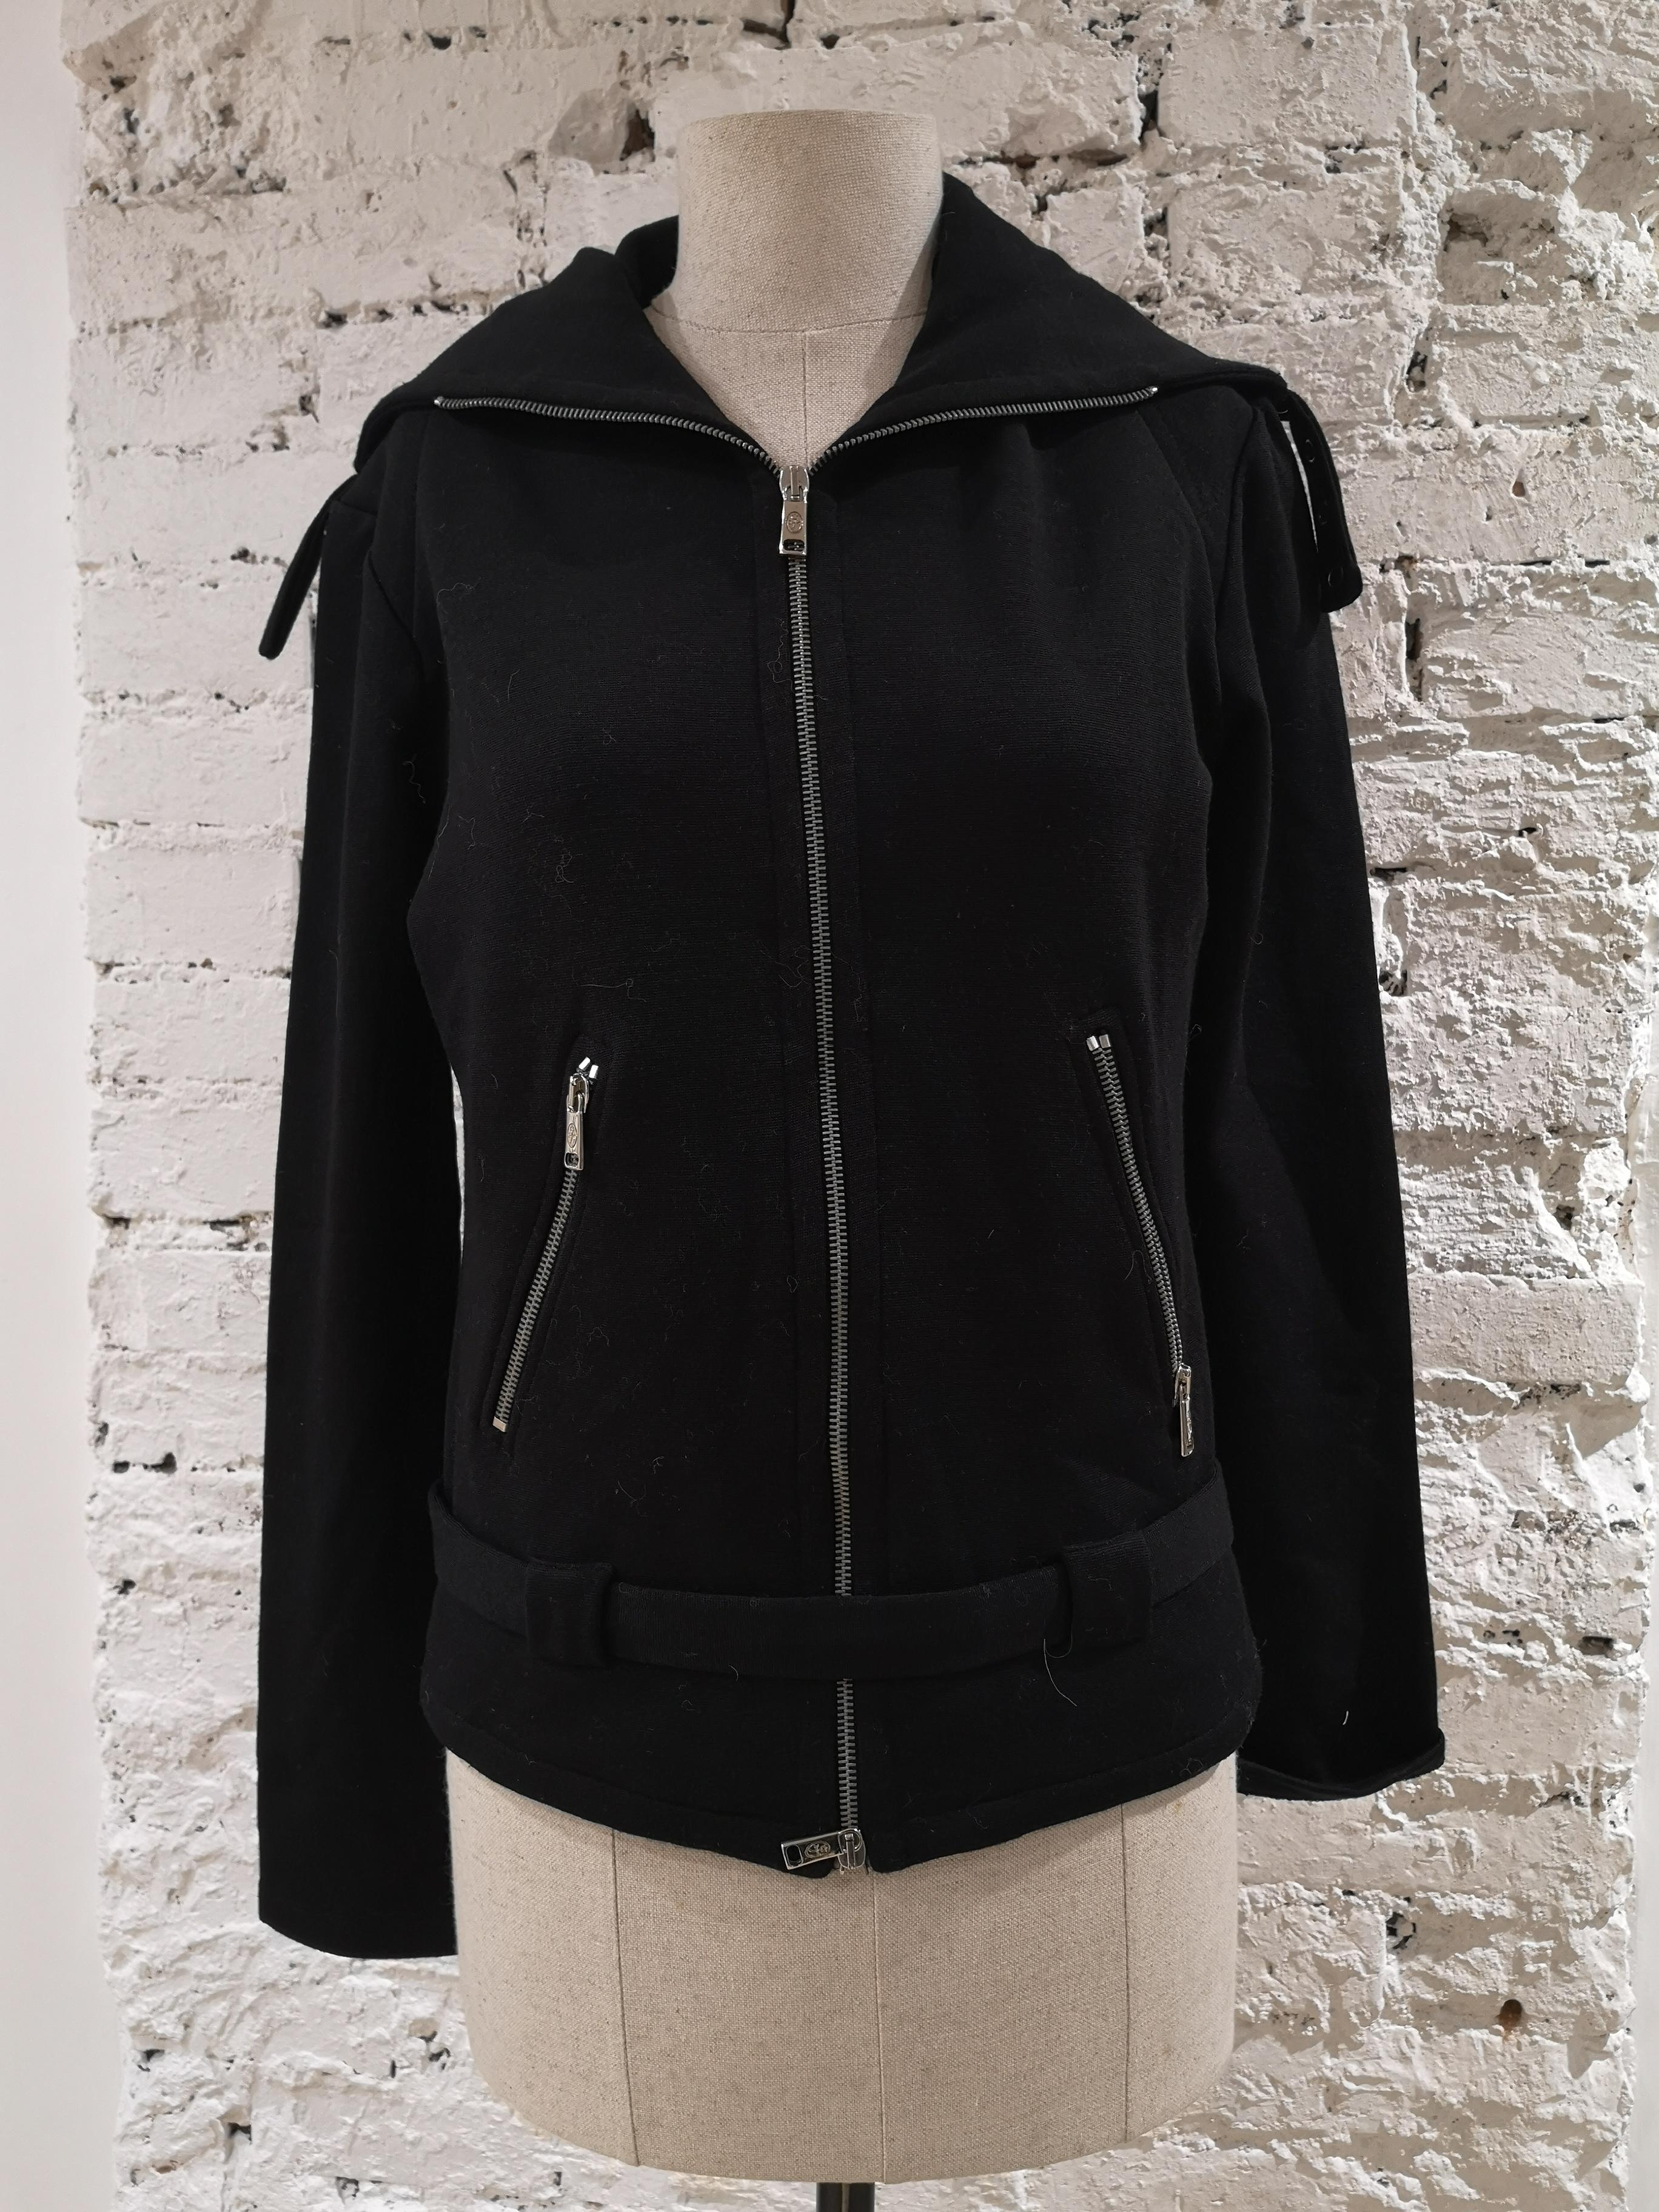 J. C. de Castelbajac black jacket
size 44